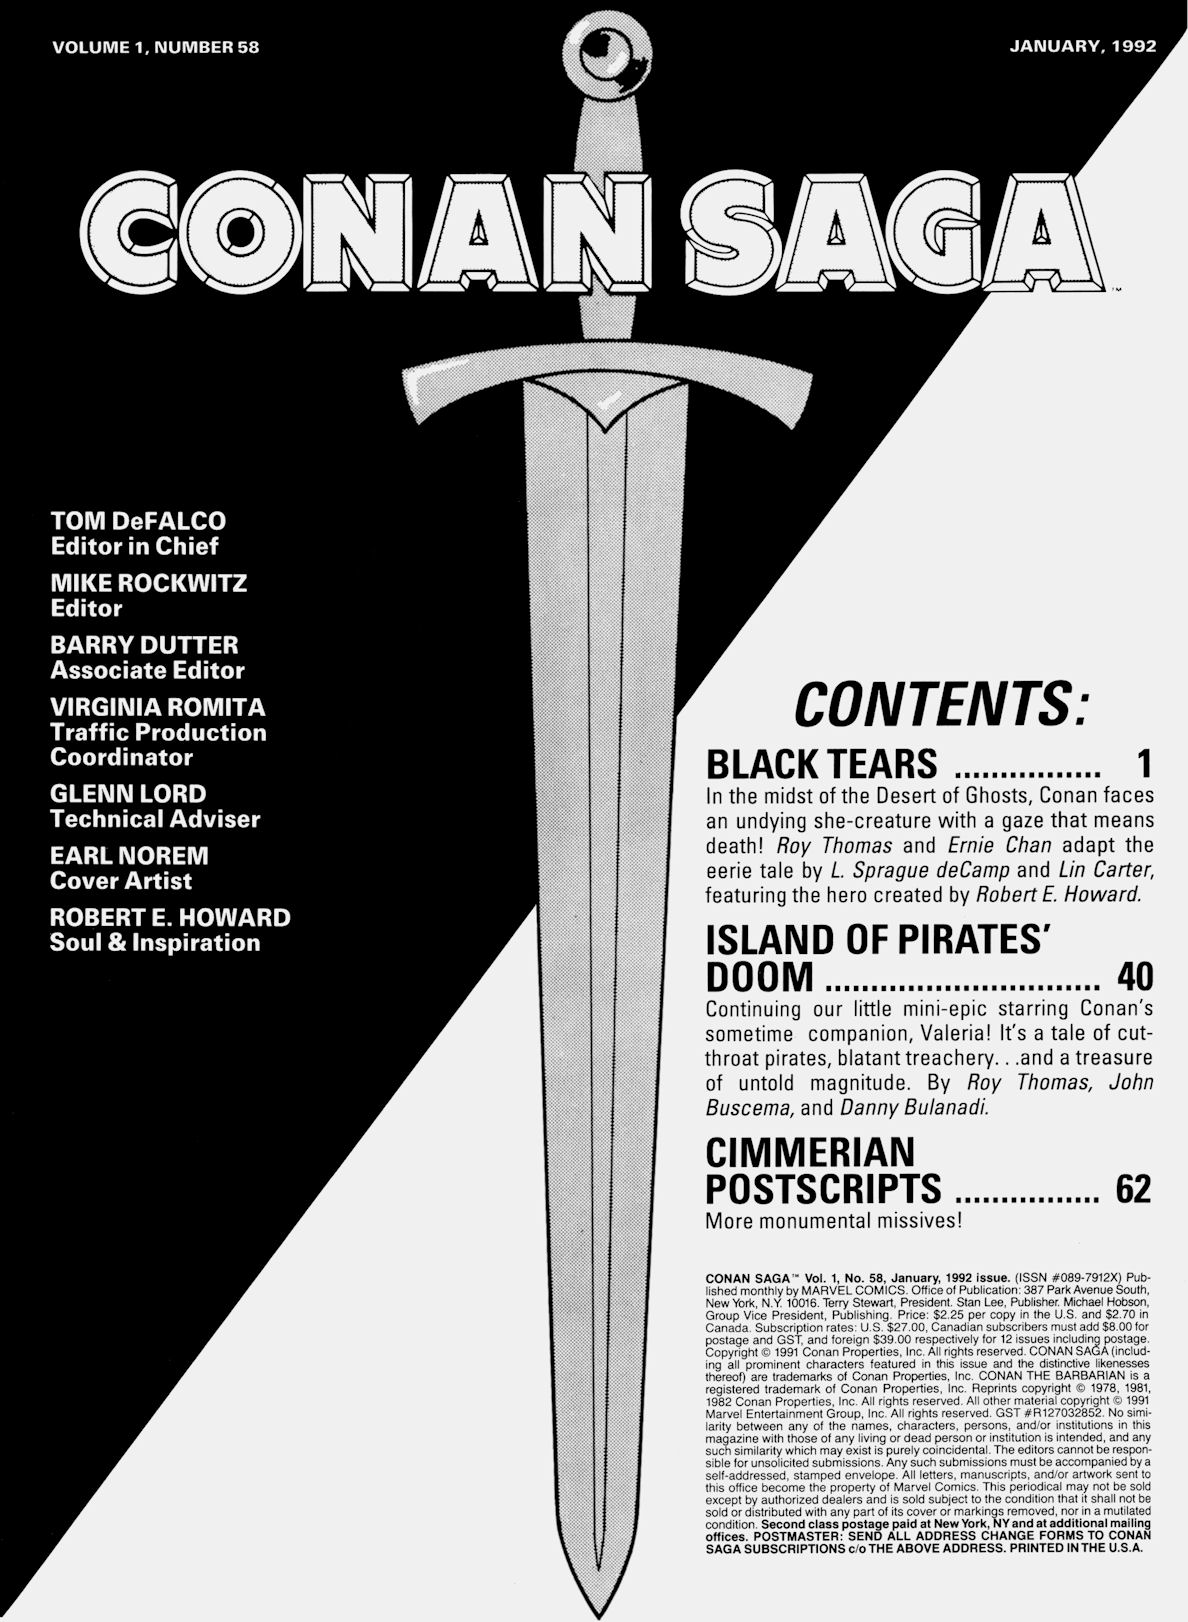 Read online Conan Saga comic -  Issue #58 - 2